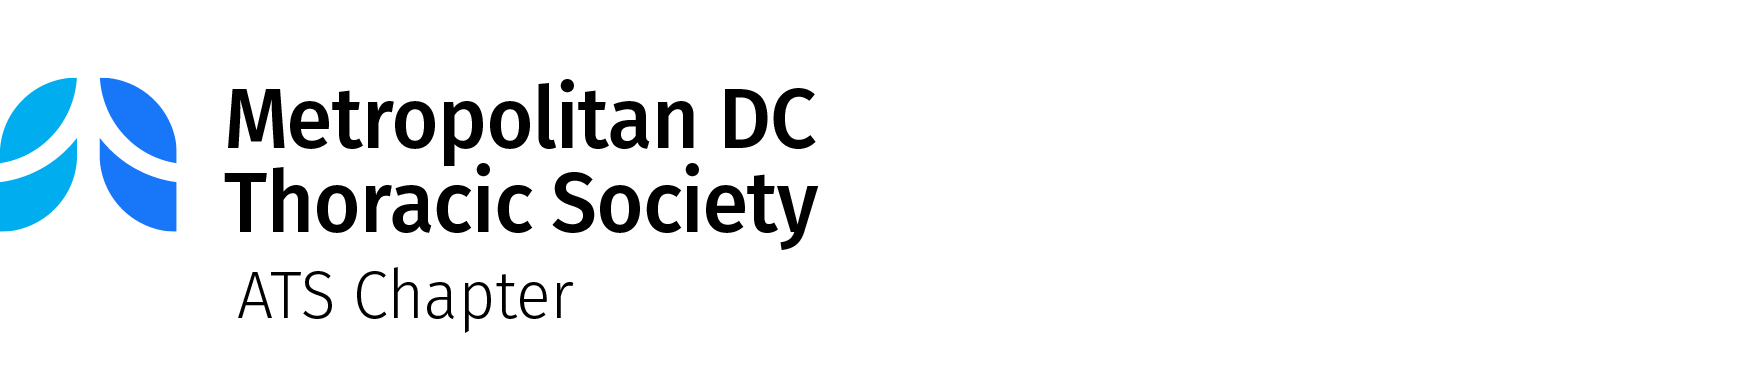 chapter logo